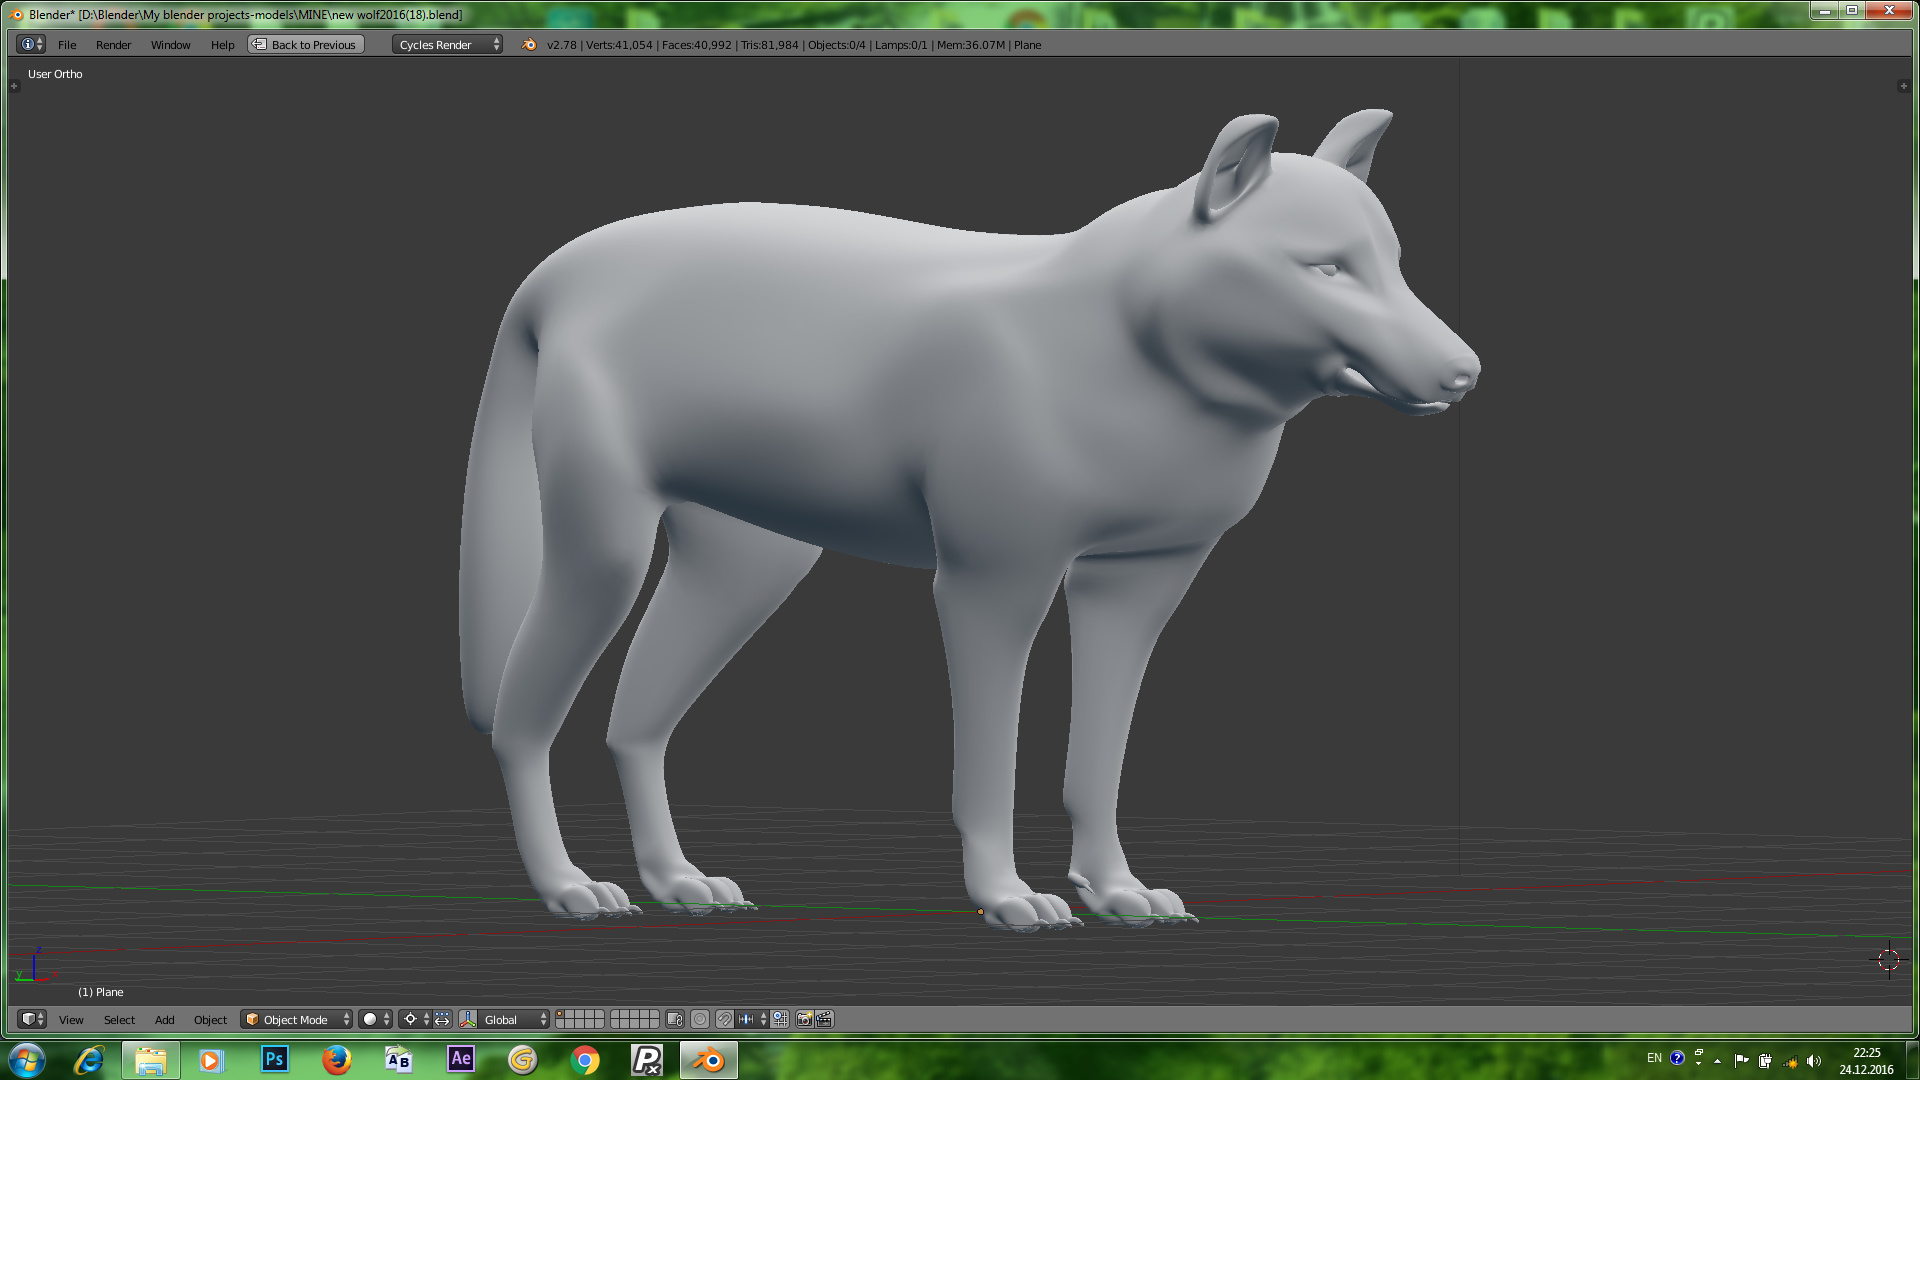 Animated Blender Wolf Models